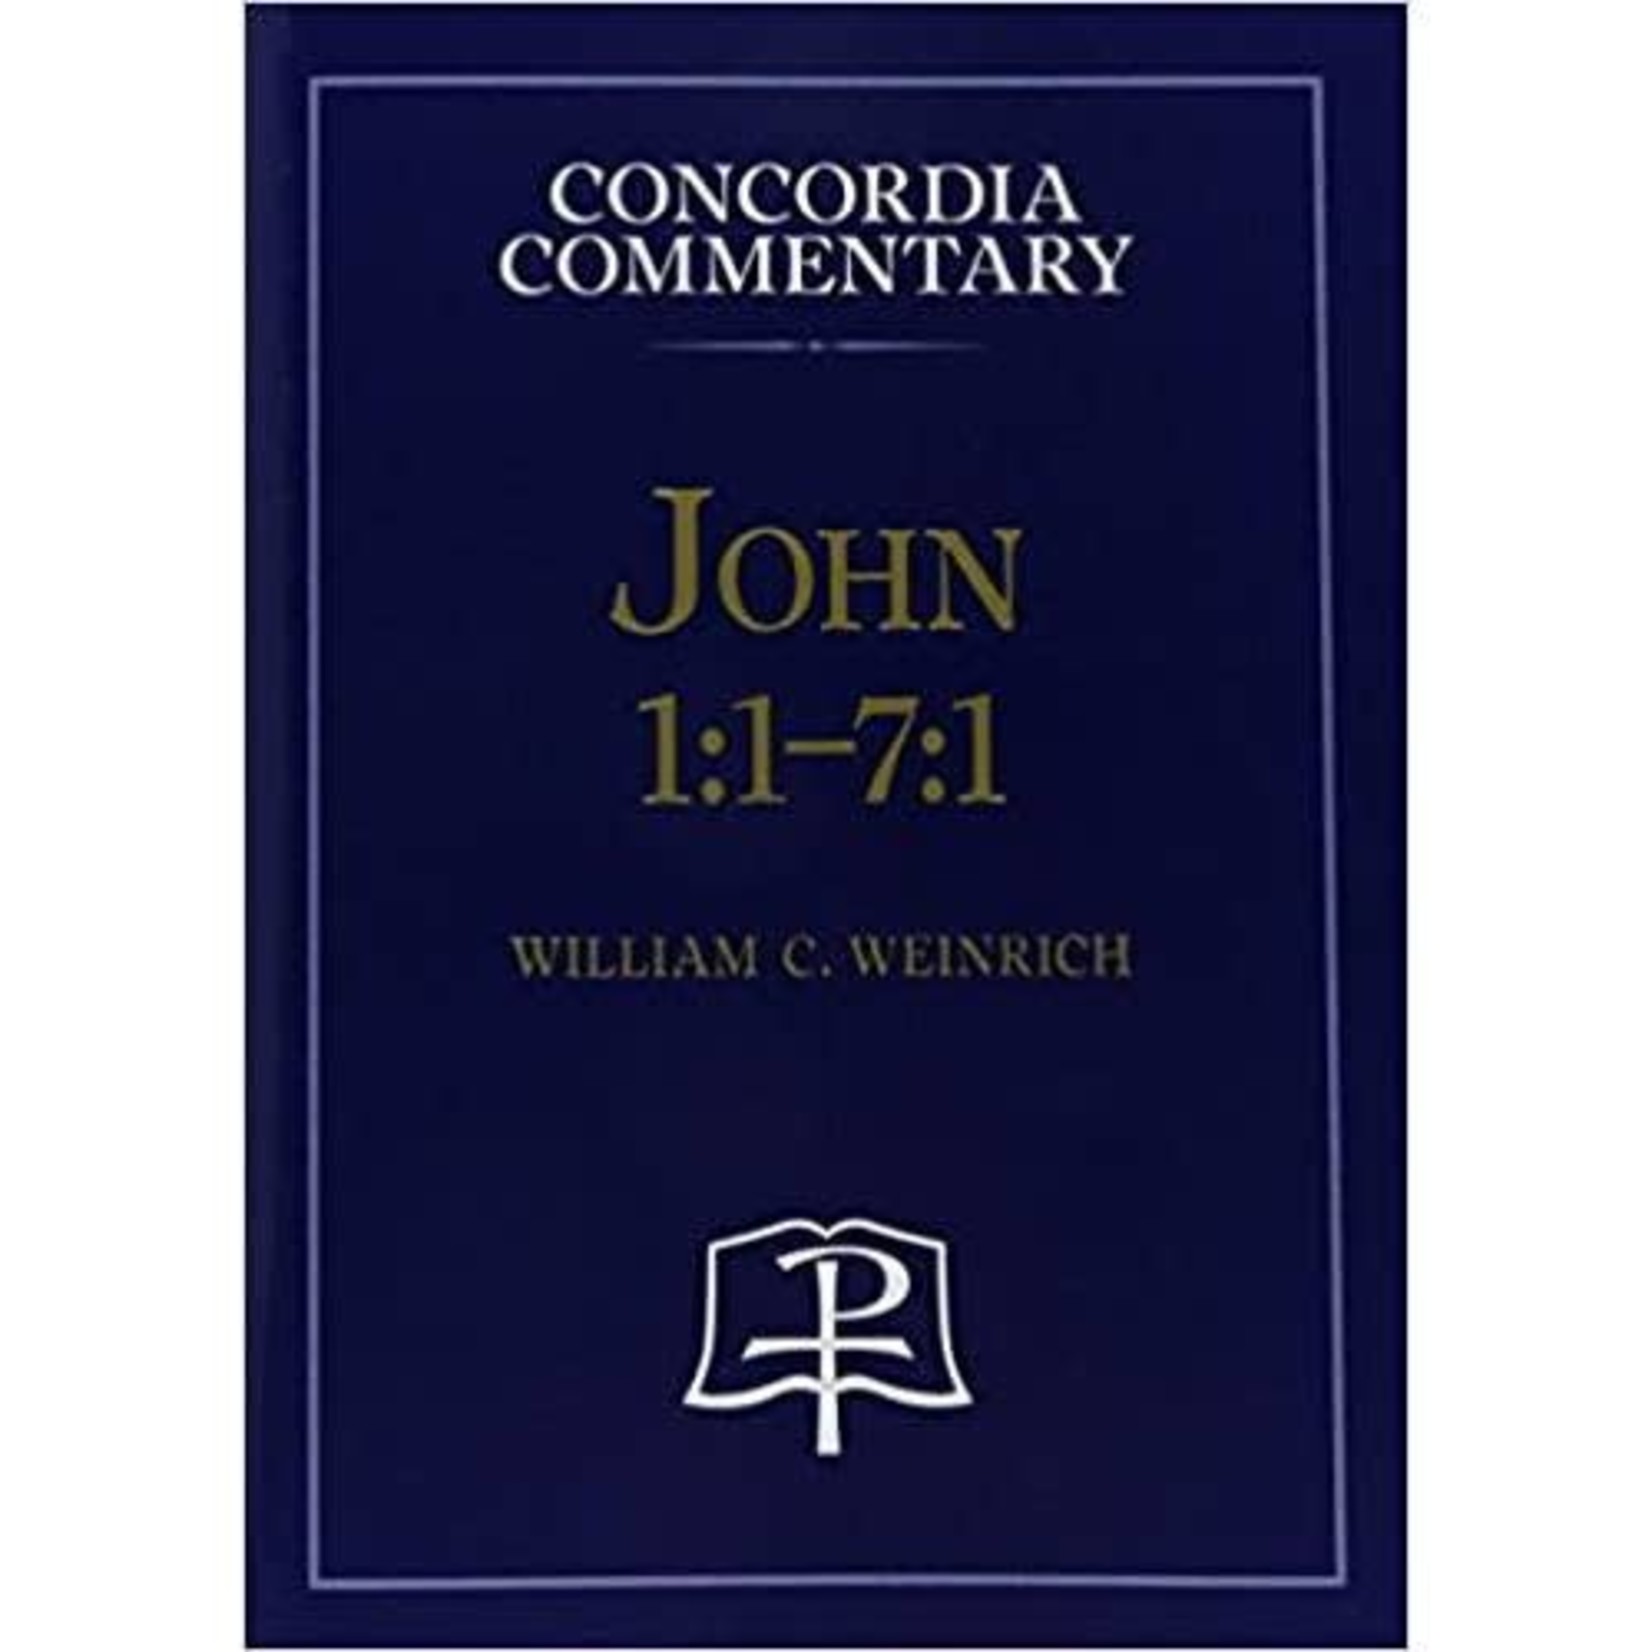 Concordia Commentary - John 1:1-7:1